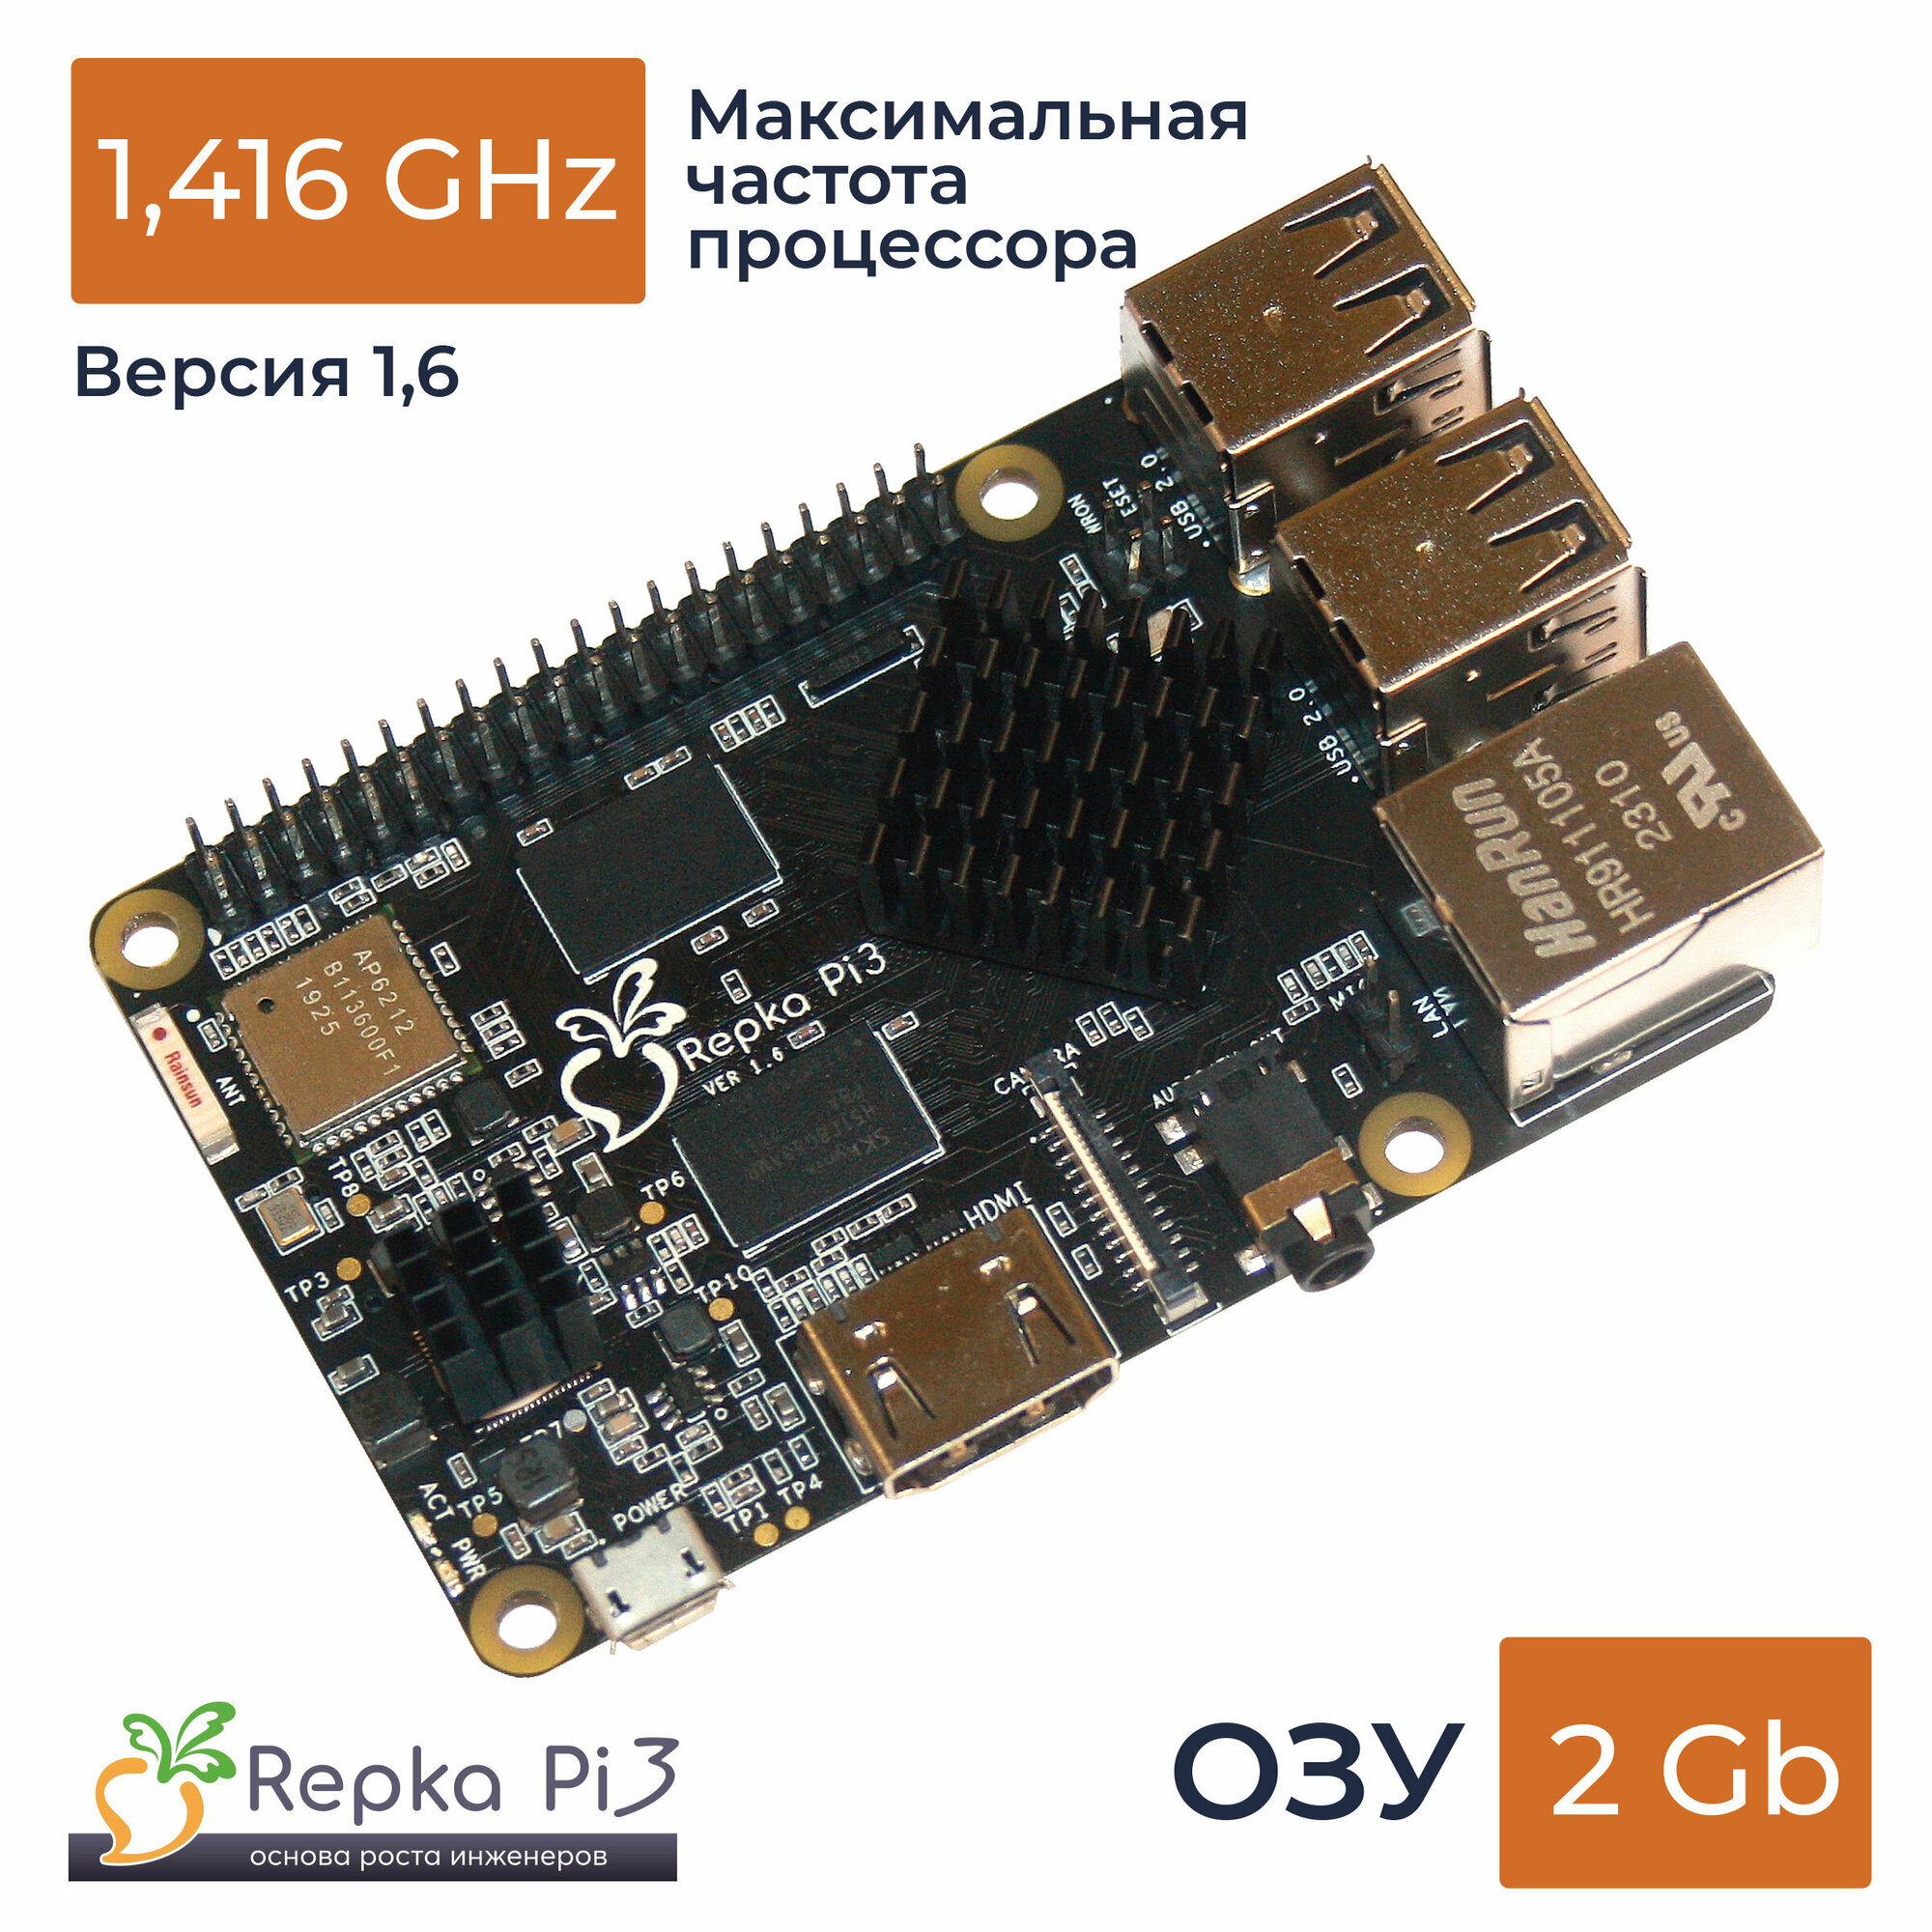 Repka Pi 3 1.416 Ghz, 2 Gb ОЗУ без корпуса. Версия платы 1.6